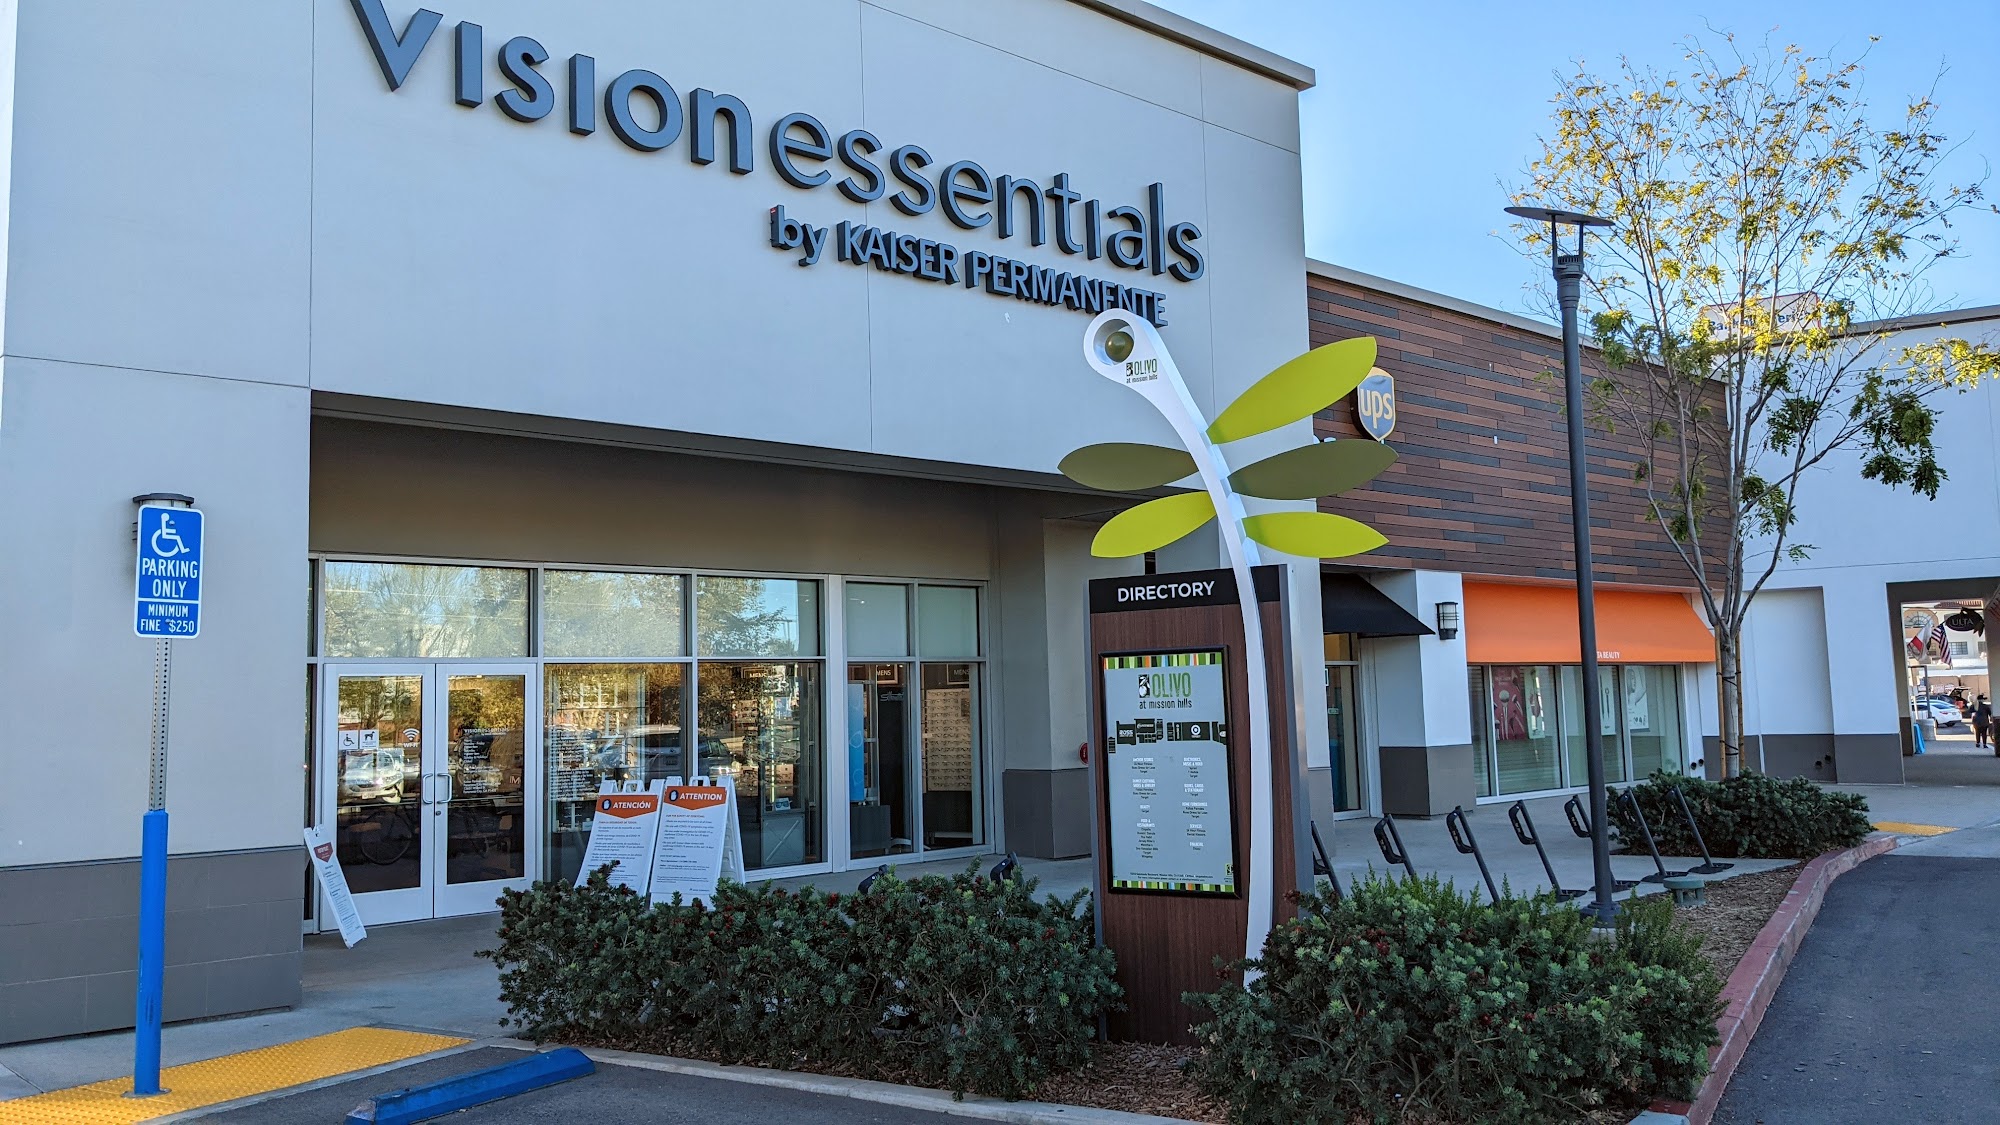 Vision Essentials by Kaiser Permanente, Mission Hills 10318 Sepulveda Blvd, Mission Hills California 91345